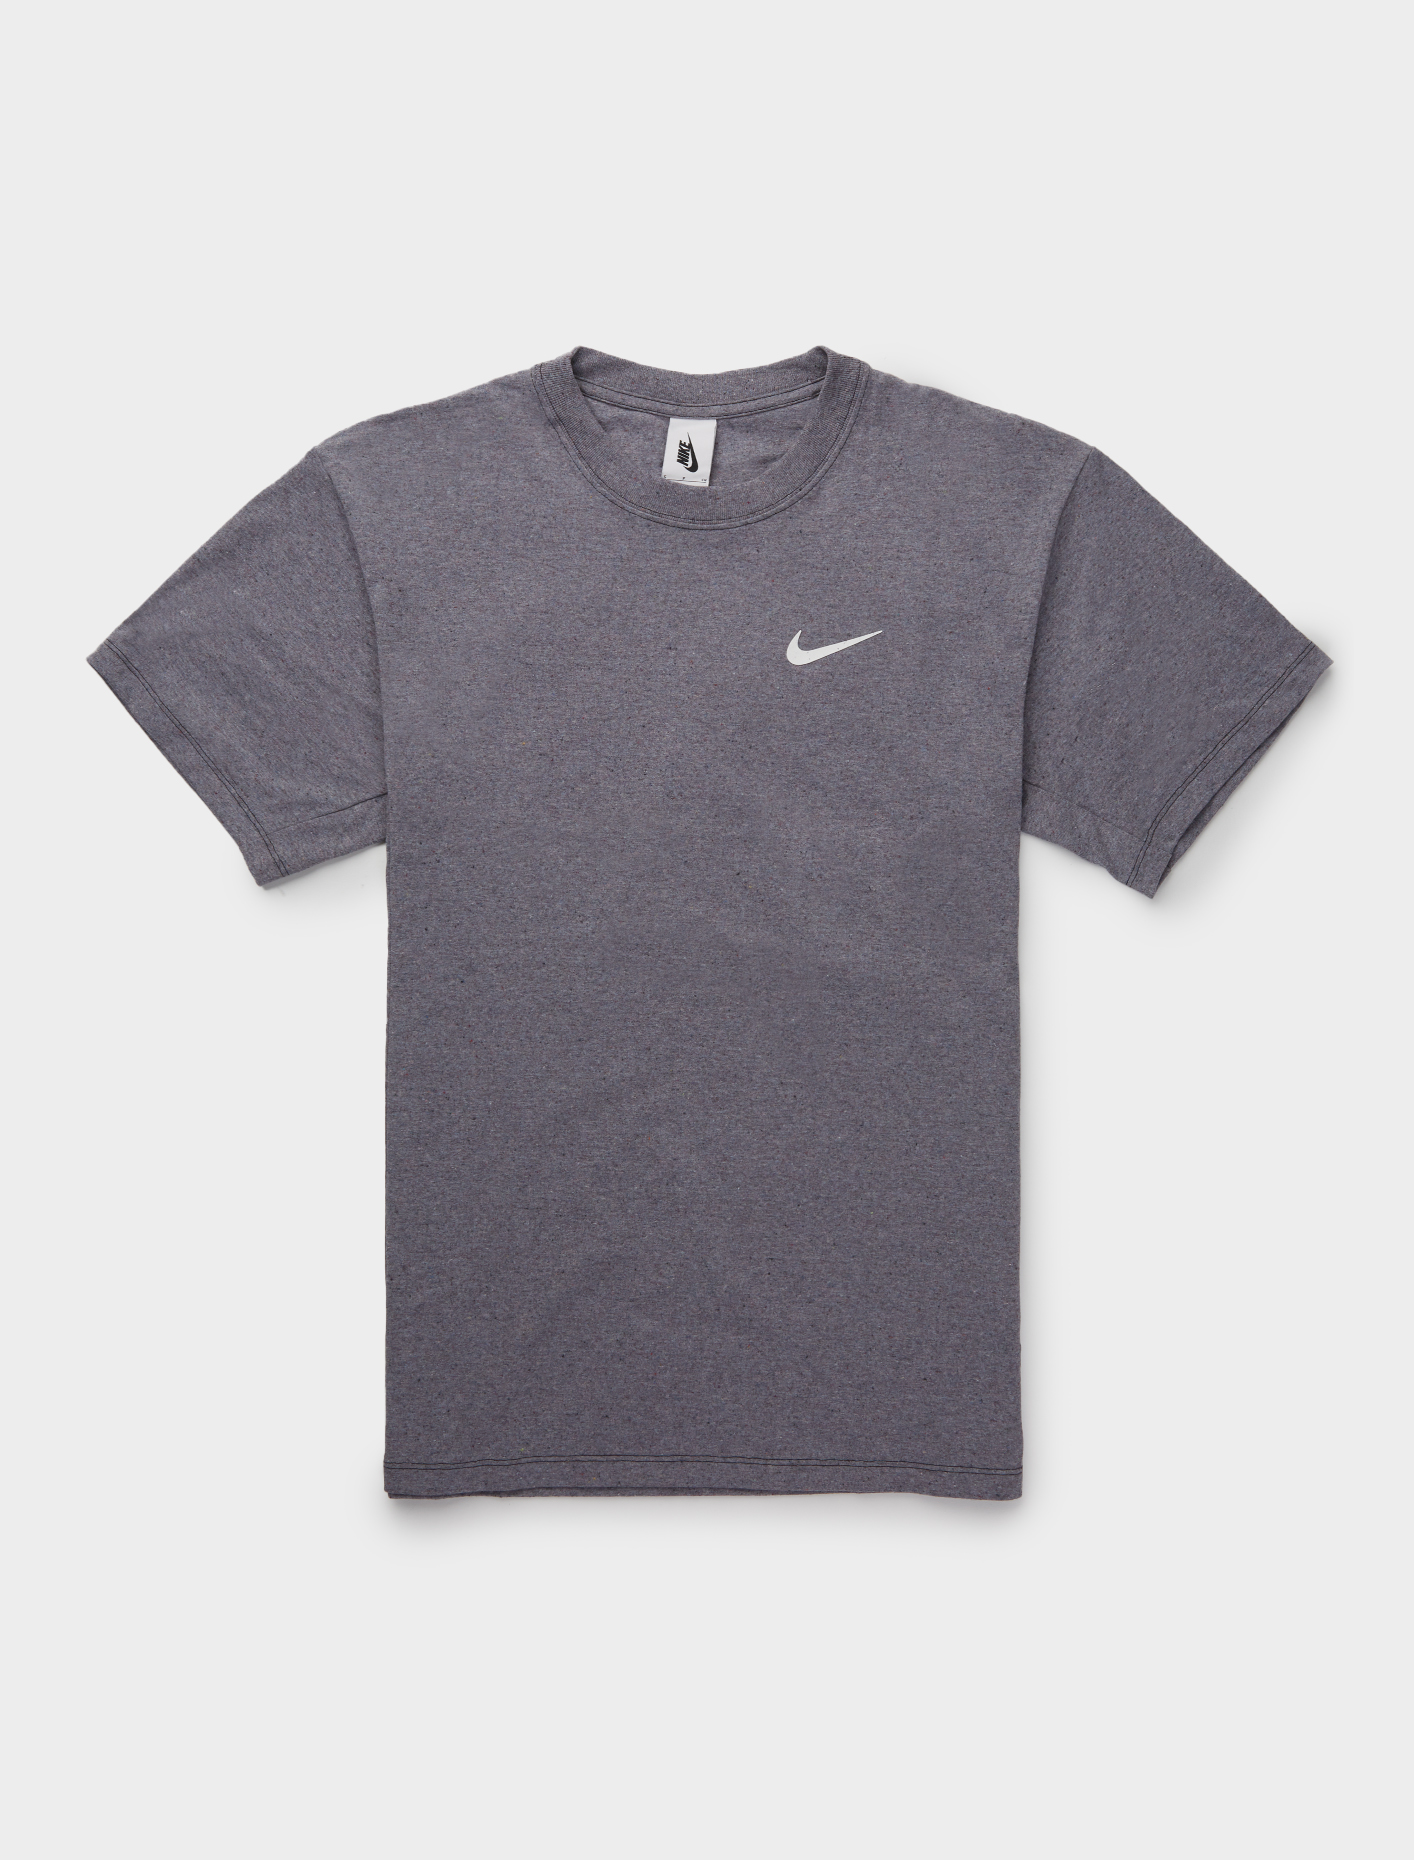 Nike Space Hippie T-Shirt | Voo Store 